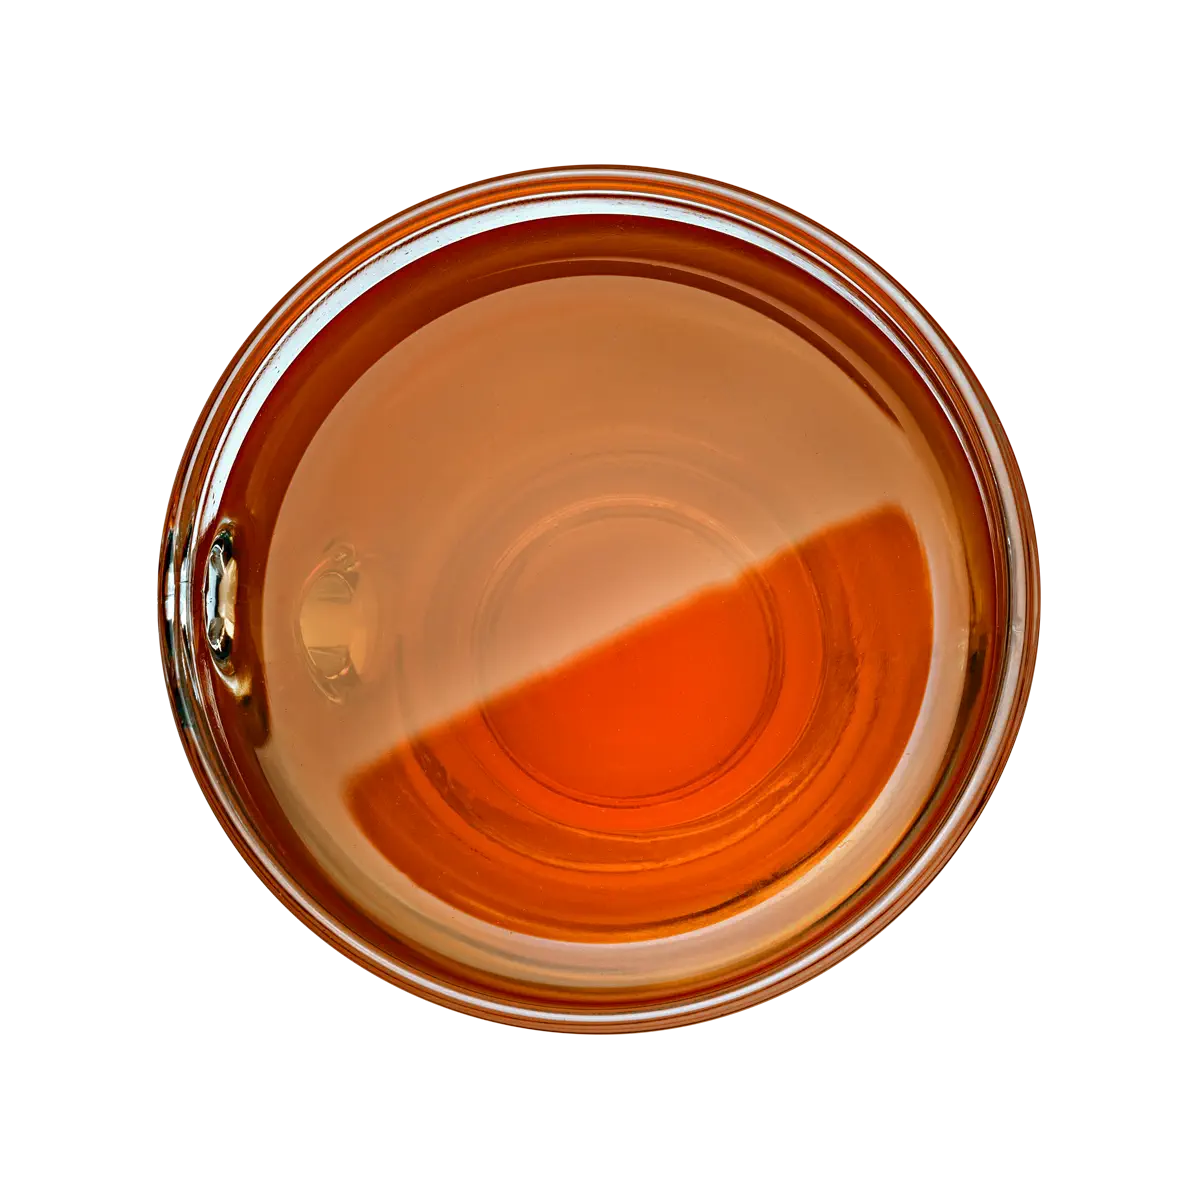 【 COLD BREW 】No.5紅玉紅茶(ルビー紅茶)10包入り